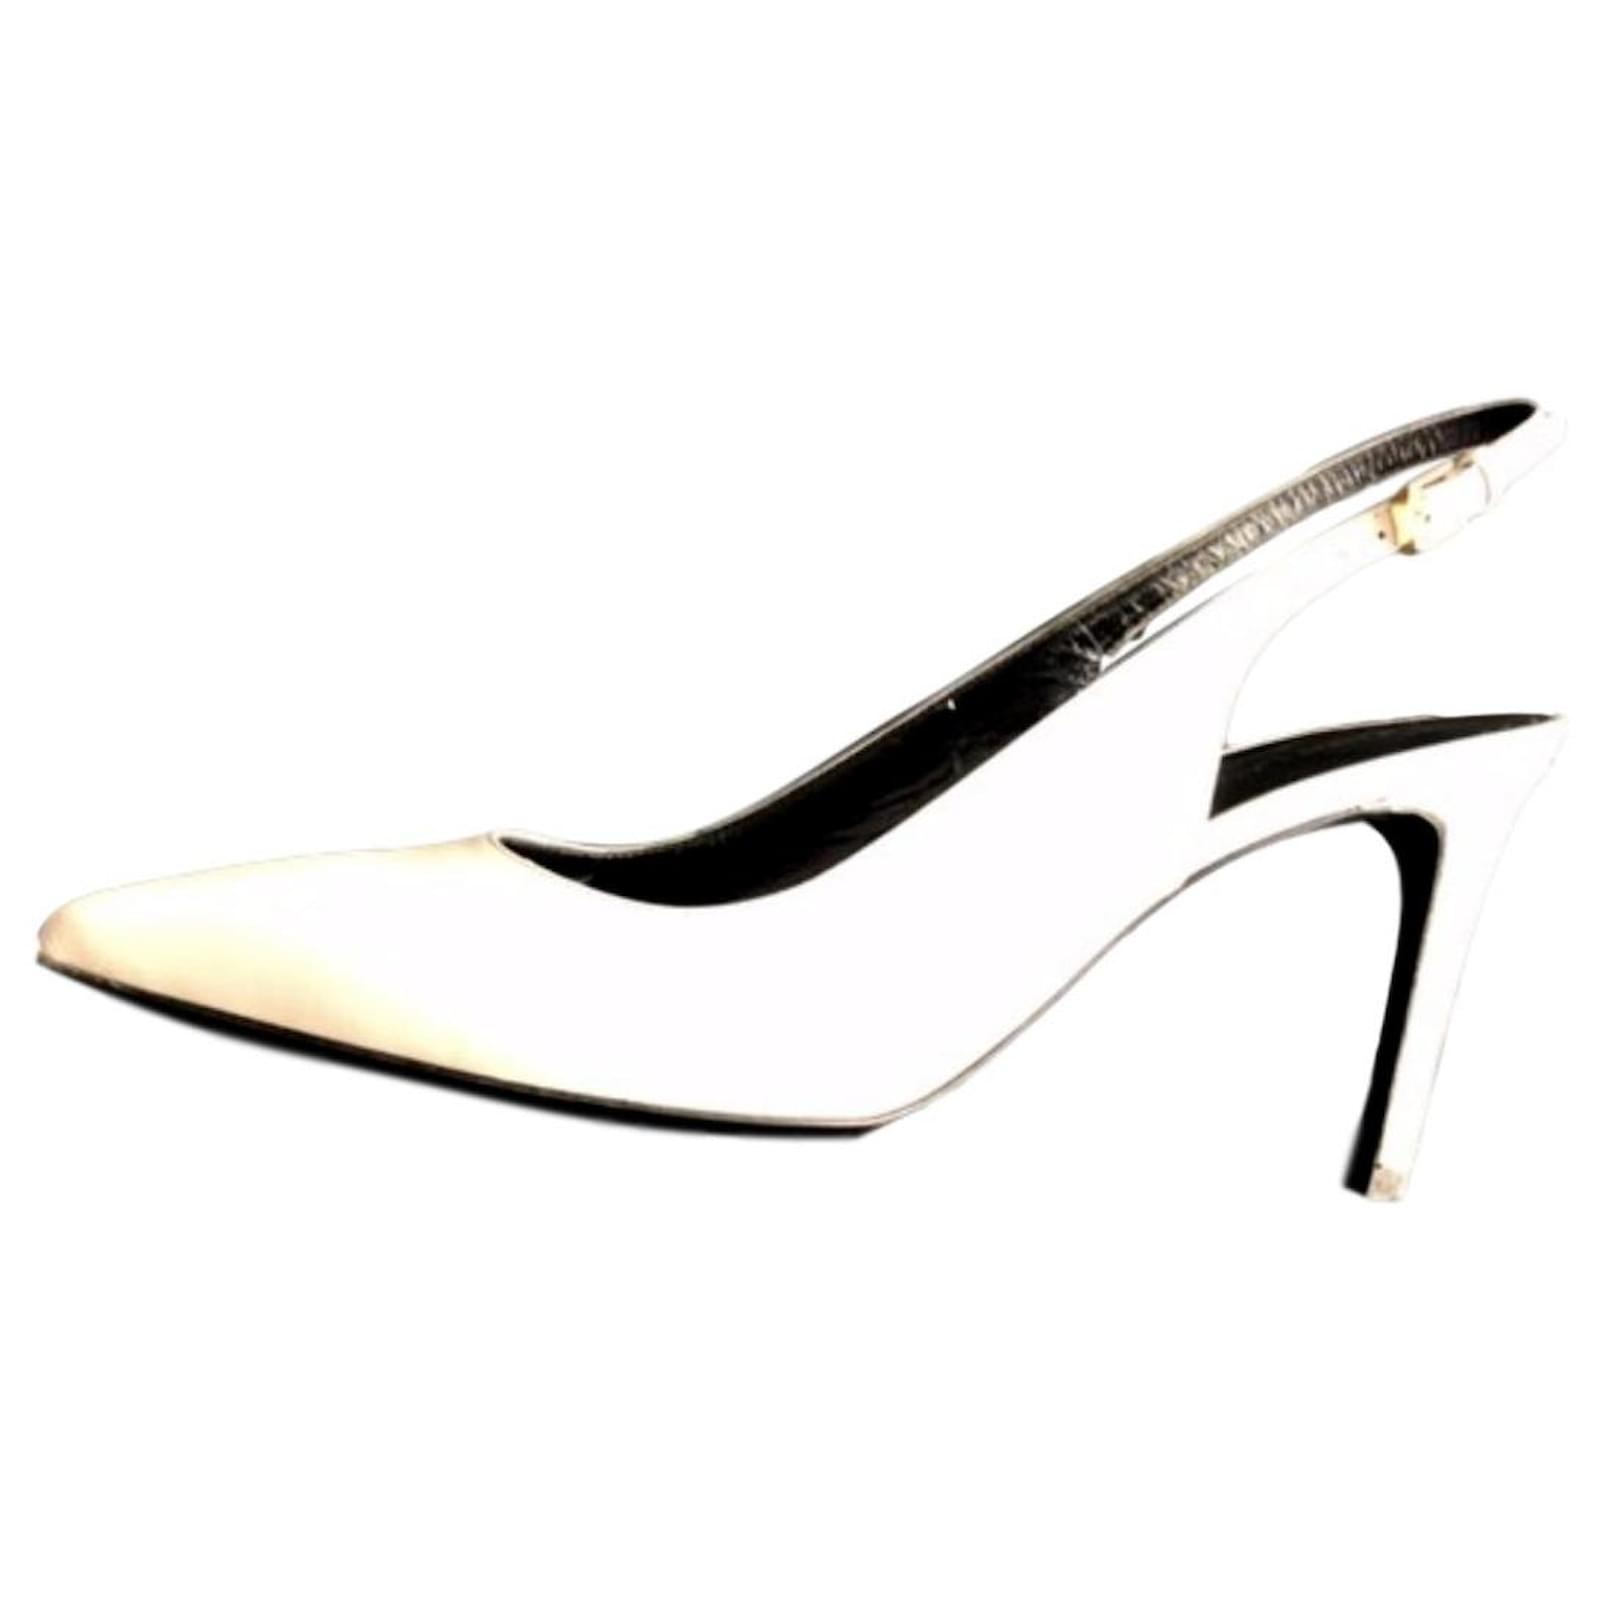 saint laurent white heels